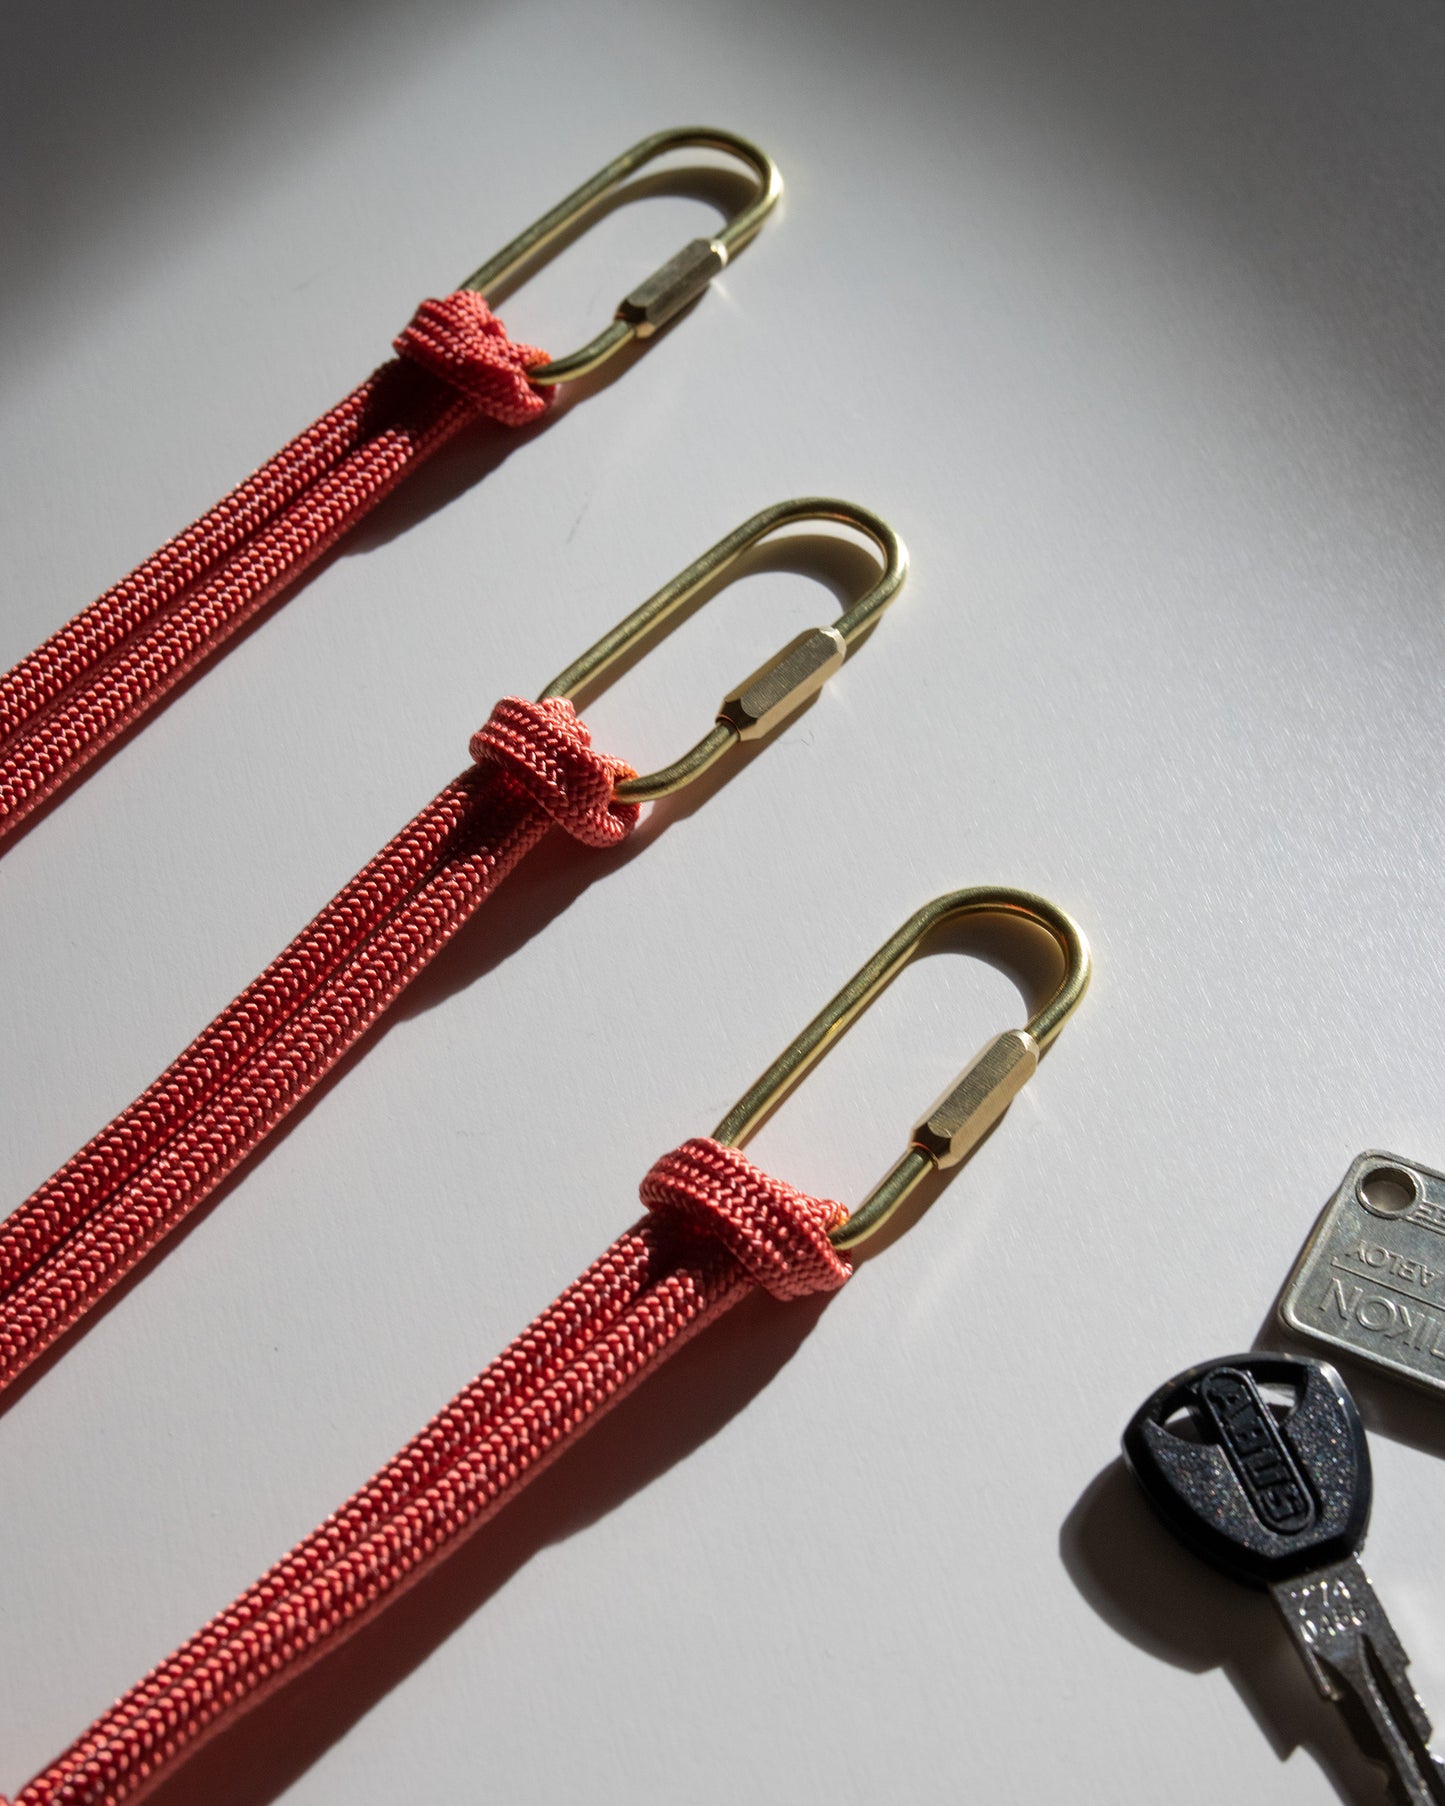 Hand made Rope Knot Keychain - Zinnia Red